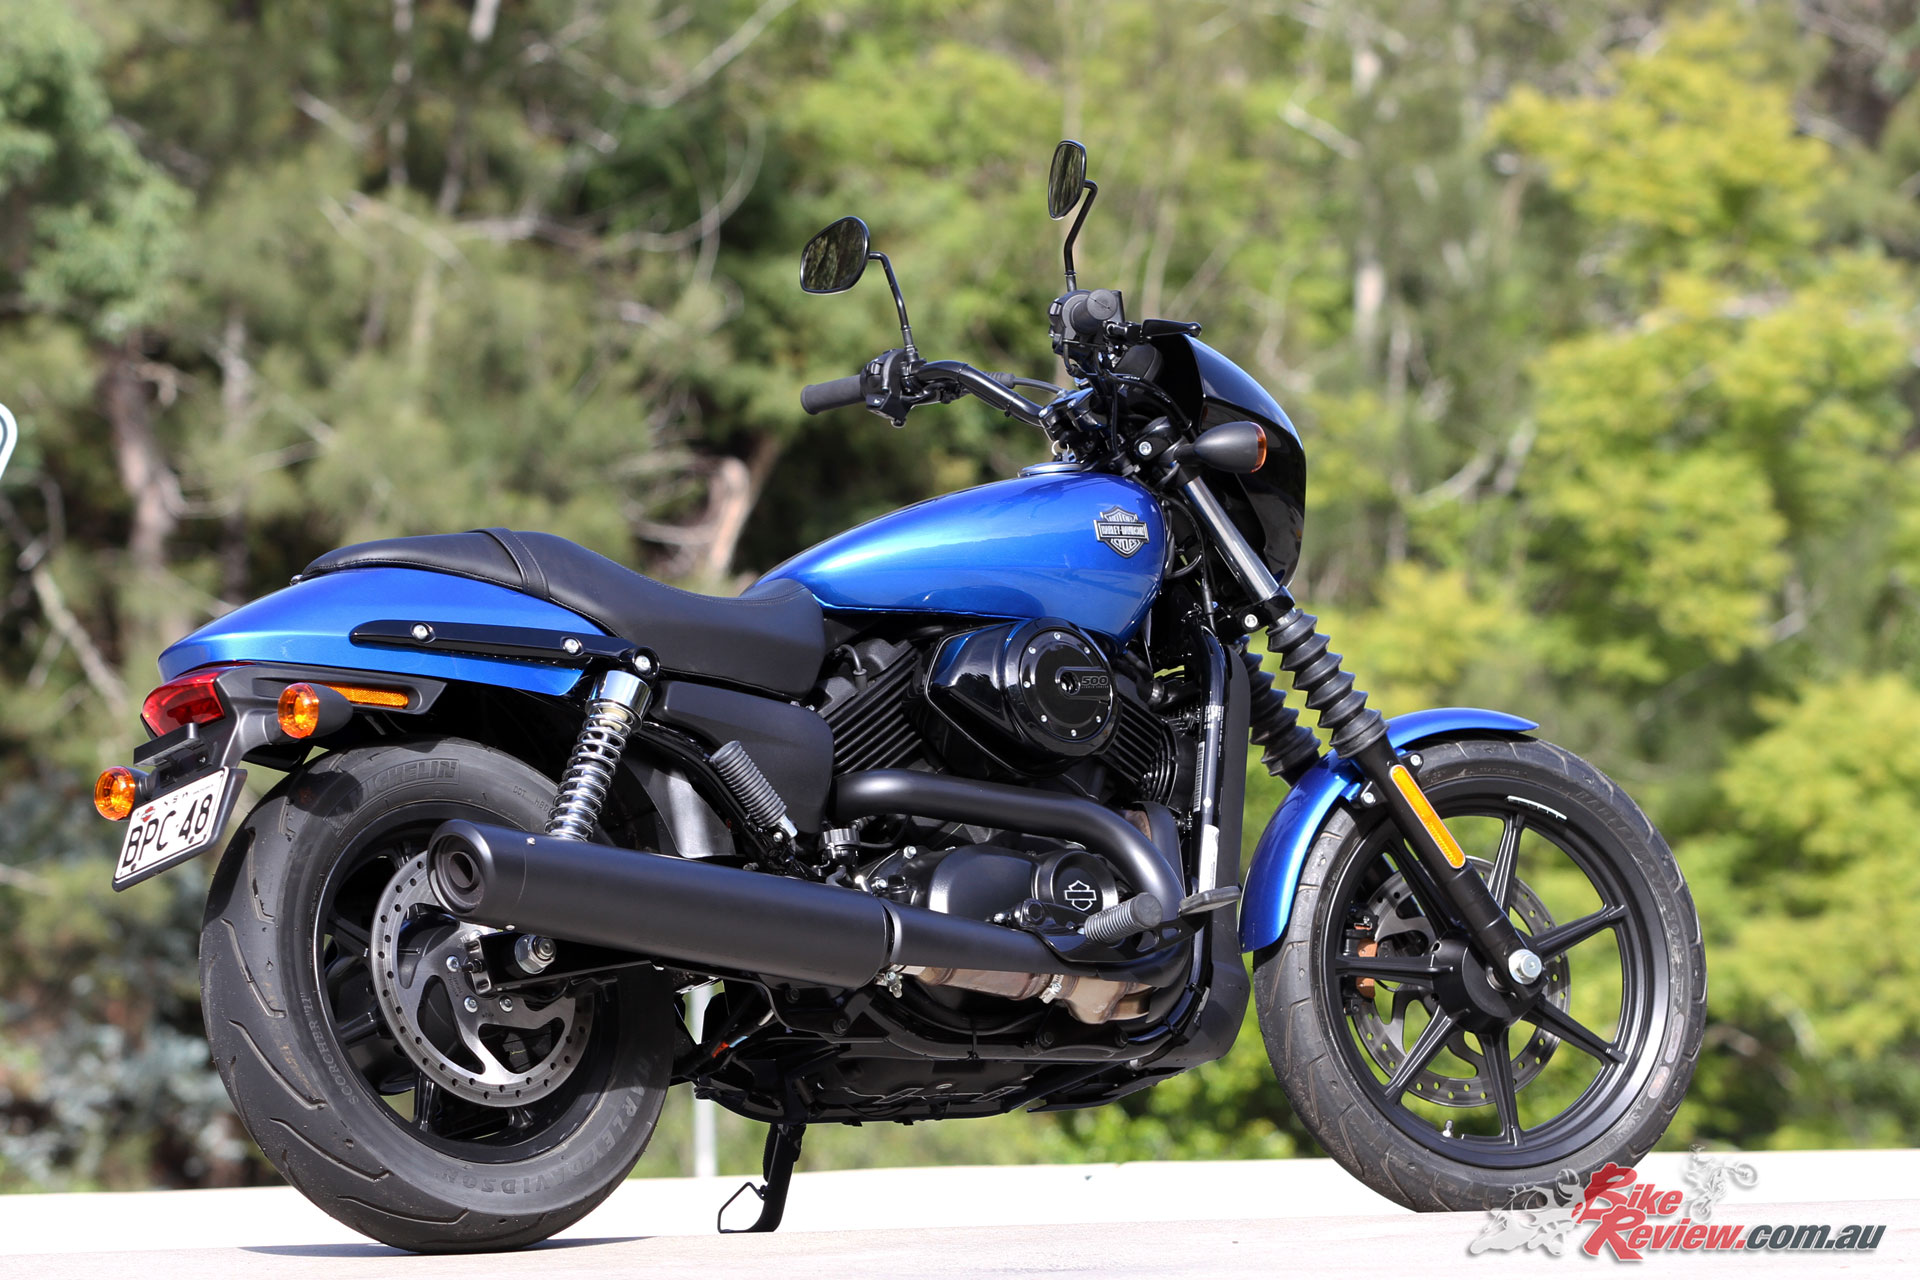 2018 Harley Davidson Street 500 Review Total Motorcycle